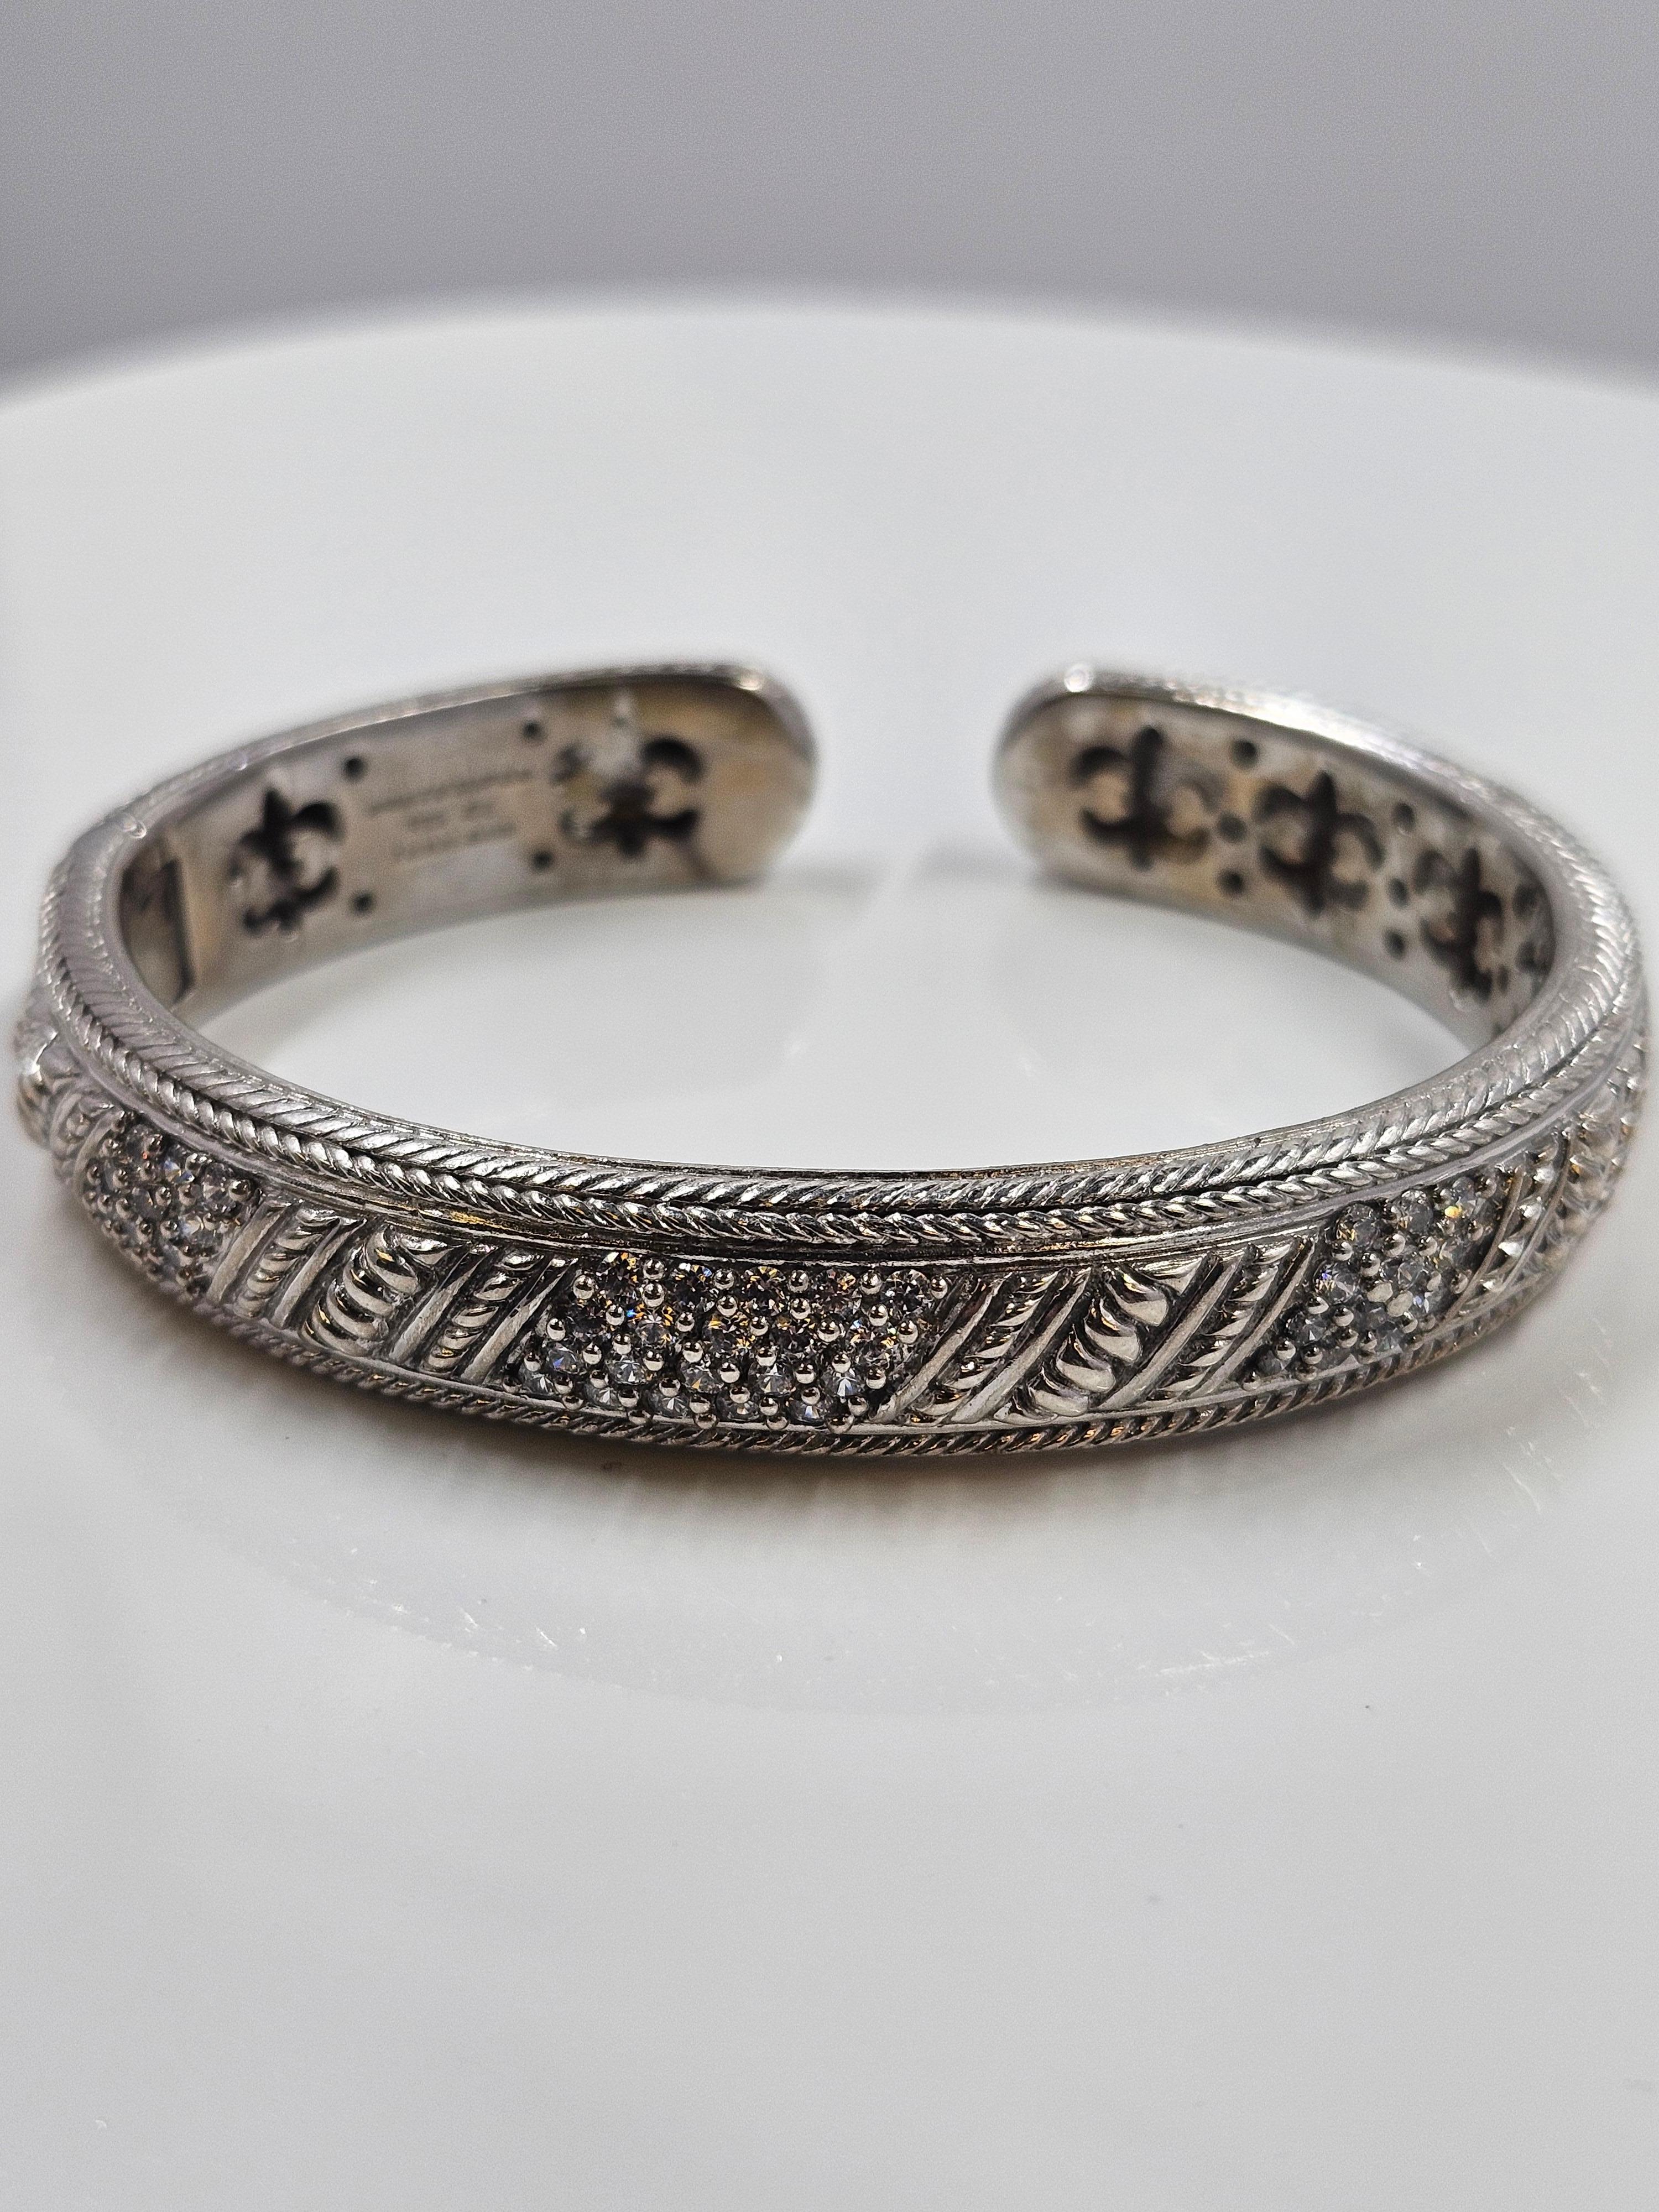 Beautiful Judith Ripka 925 sterling silver and cz hinged cuff bracelet. 63mm diameter.